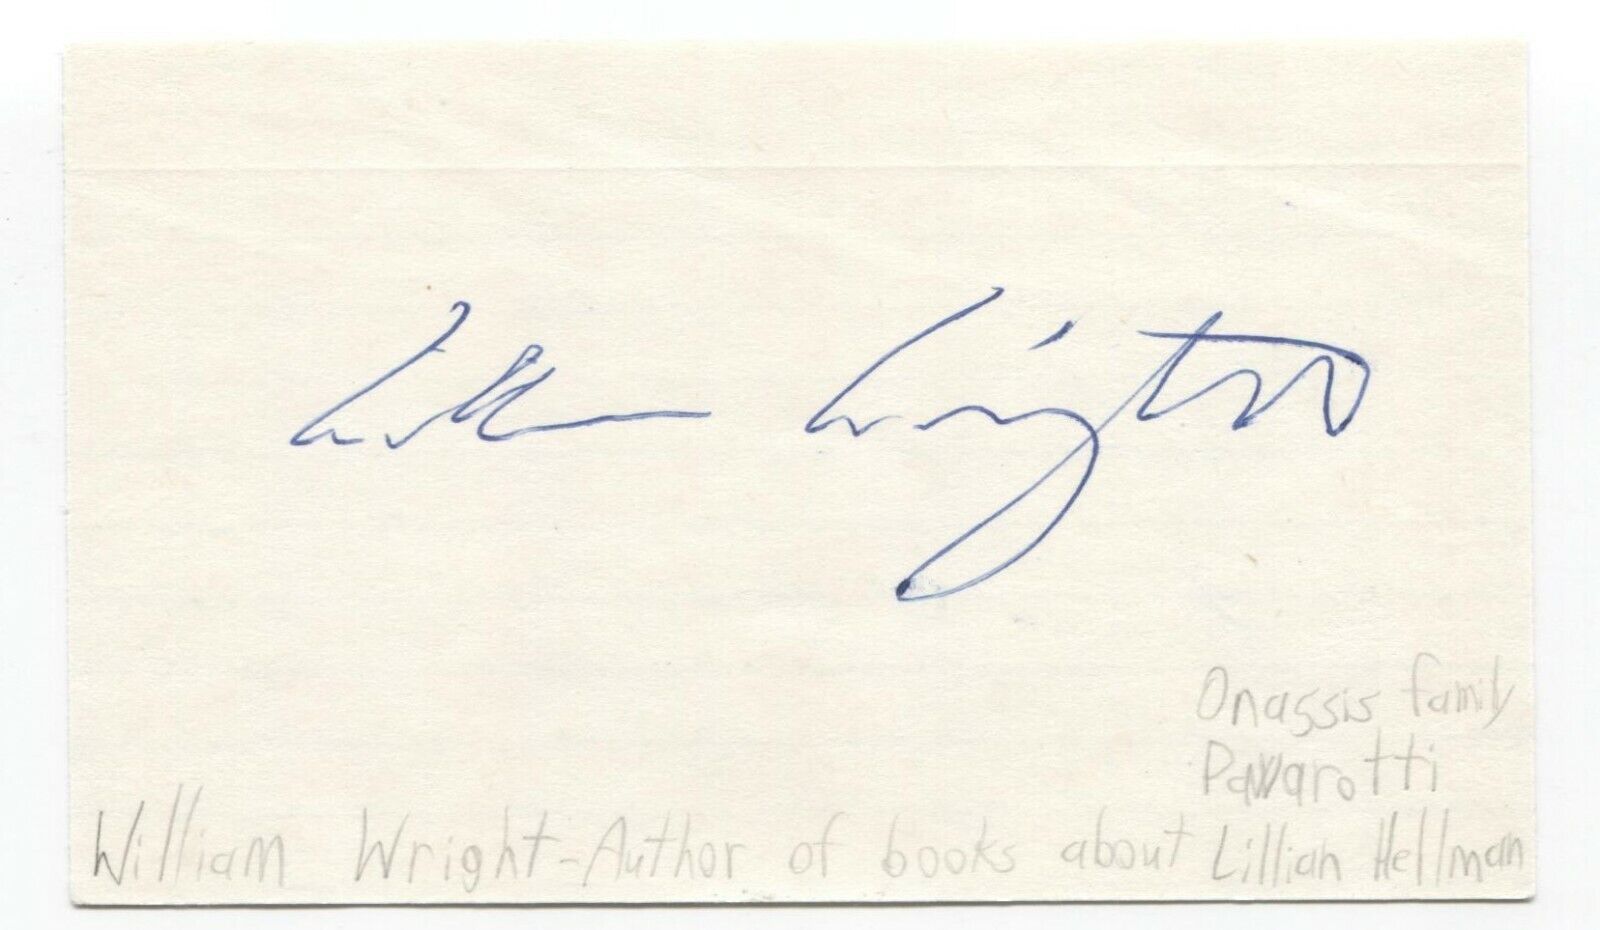 William Wright Signed 3x5 Index Card Autographed Signature Author Writer